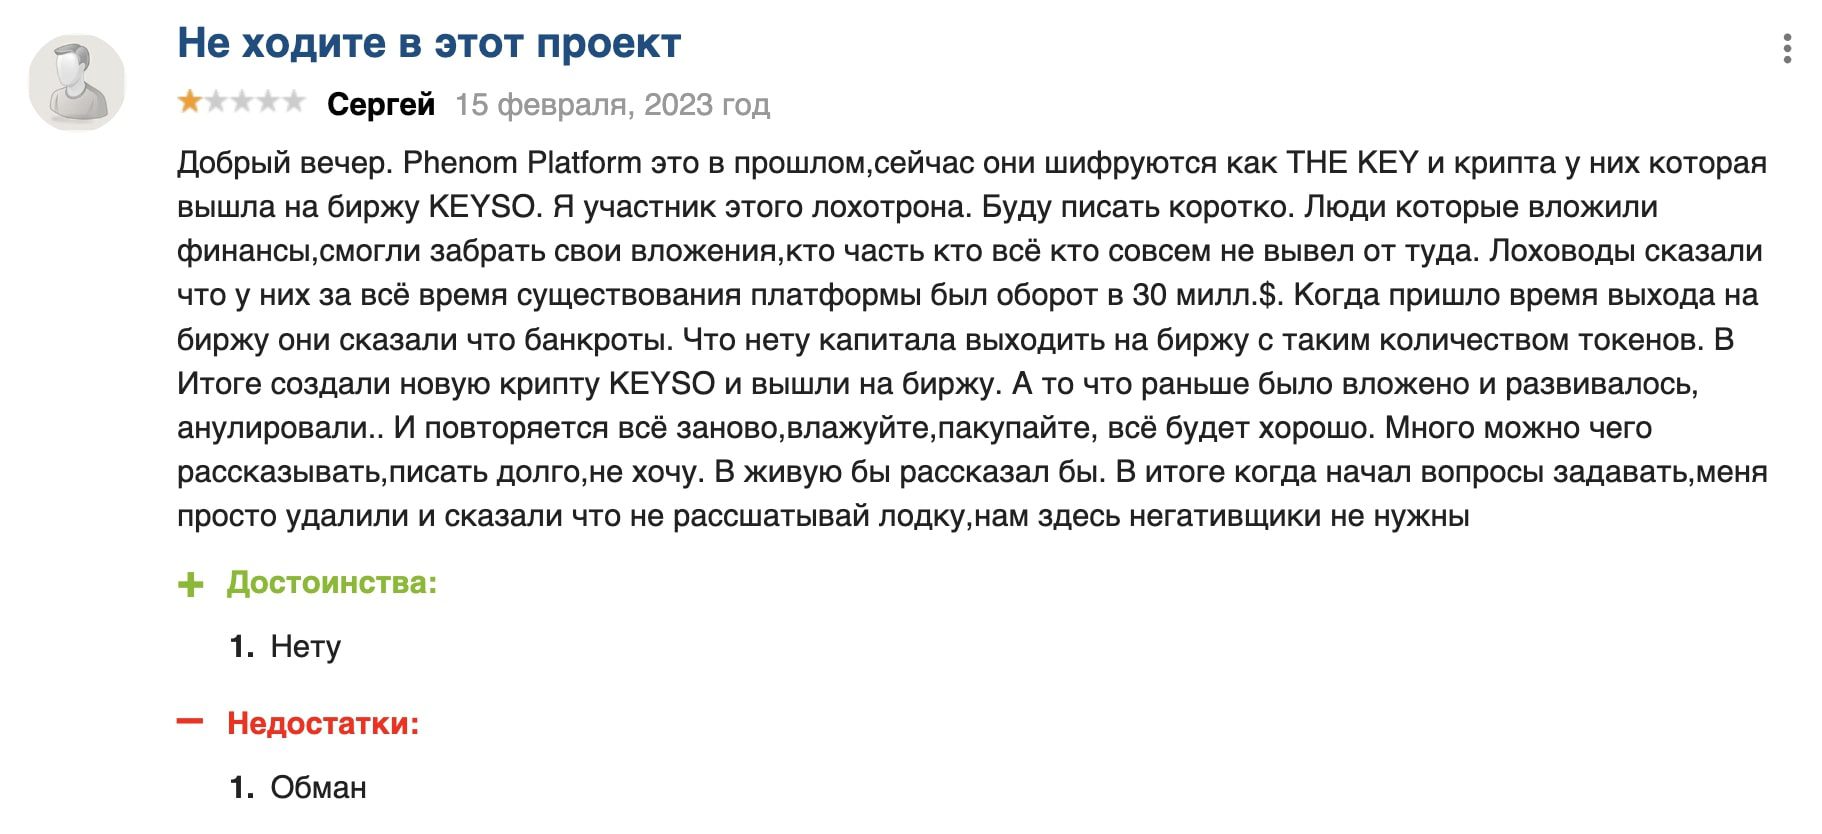 Phenom Platform отзыв